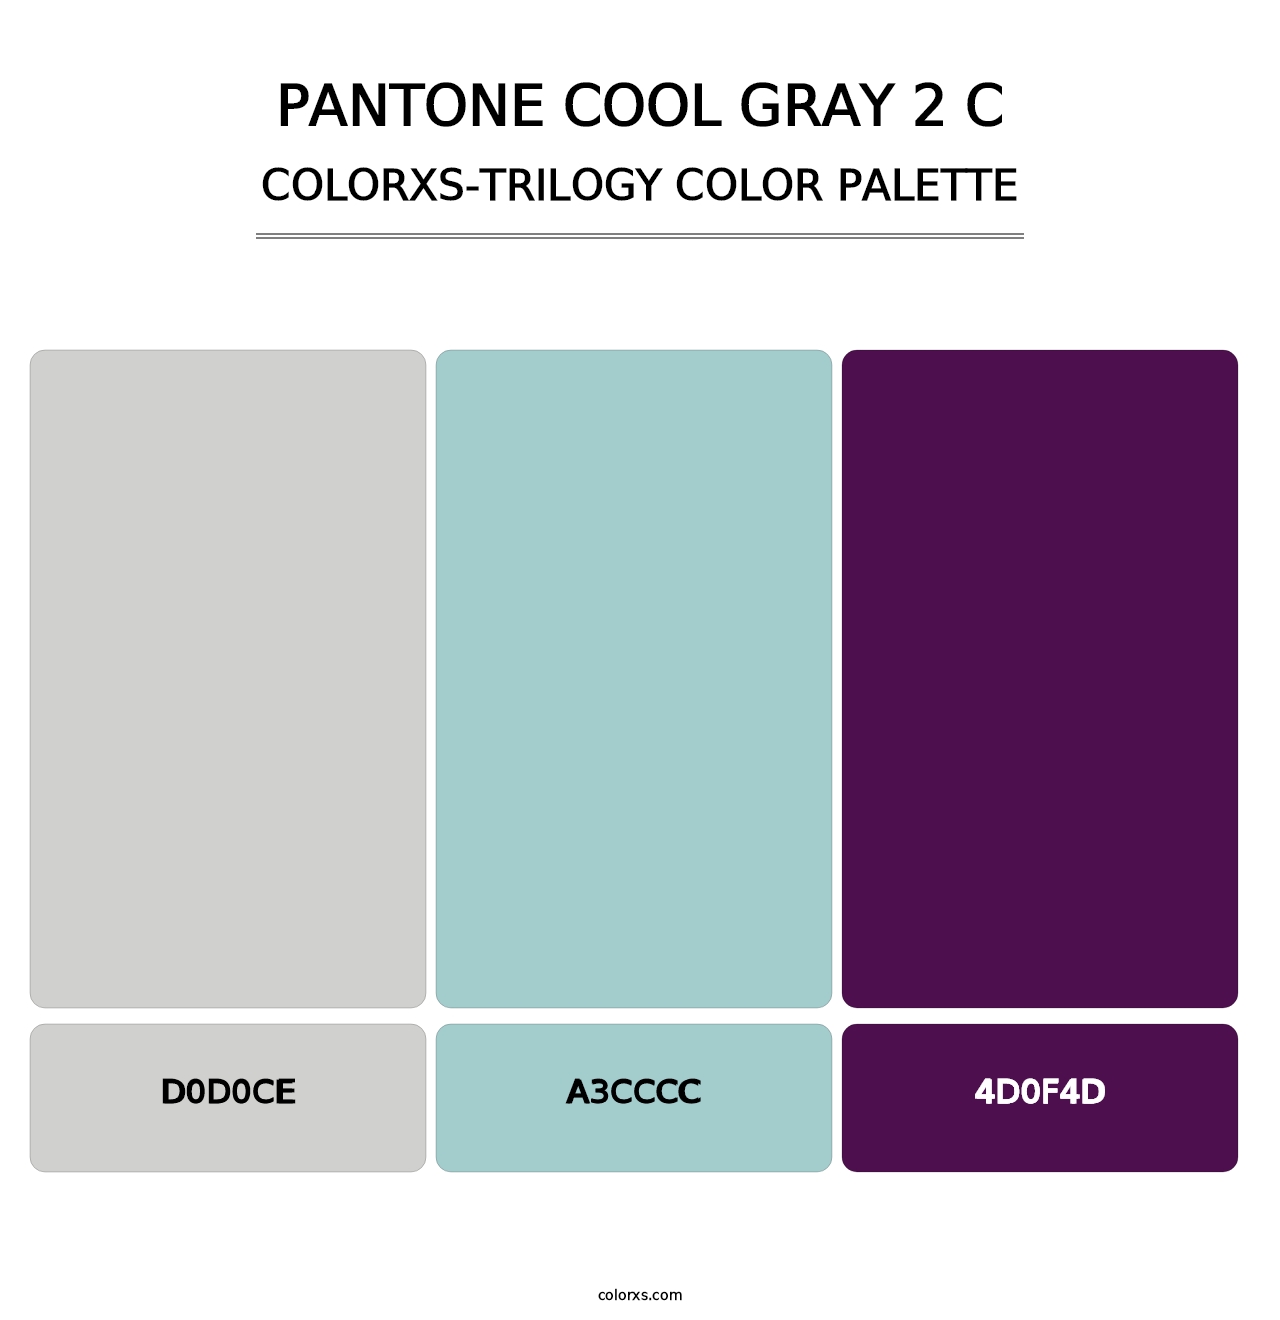 PANTONE Cool Gray 2 C - Colorxs Trilogy Palette